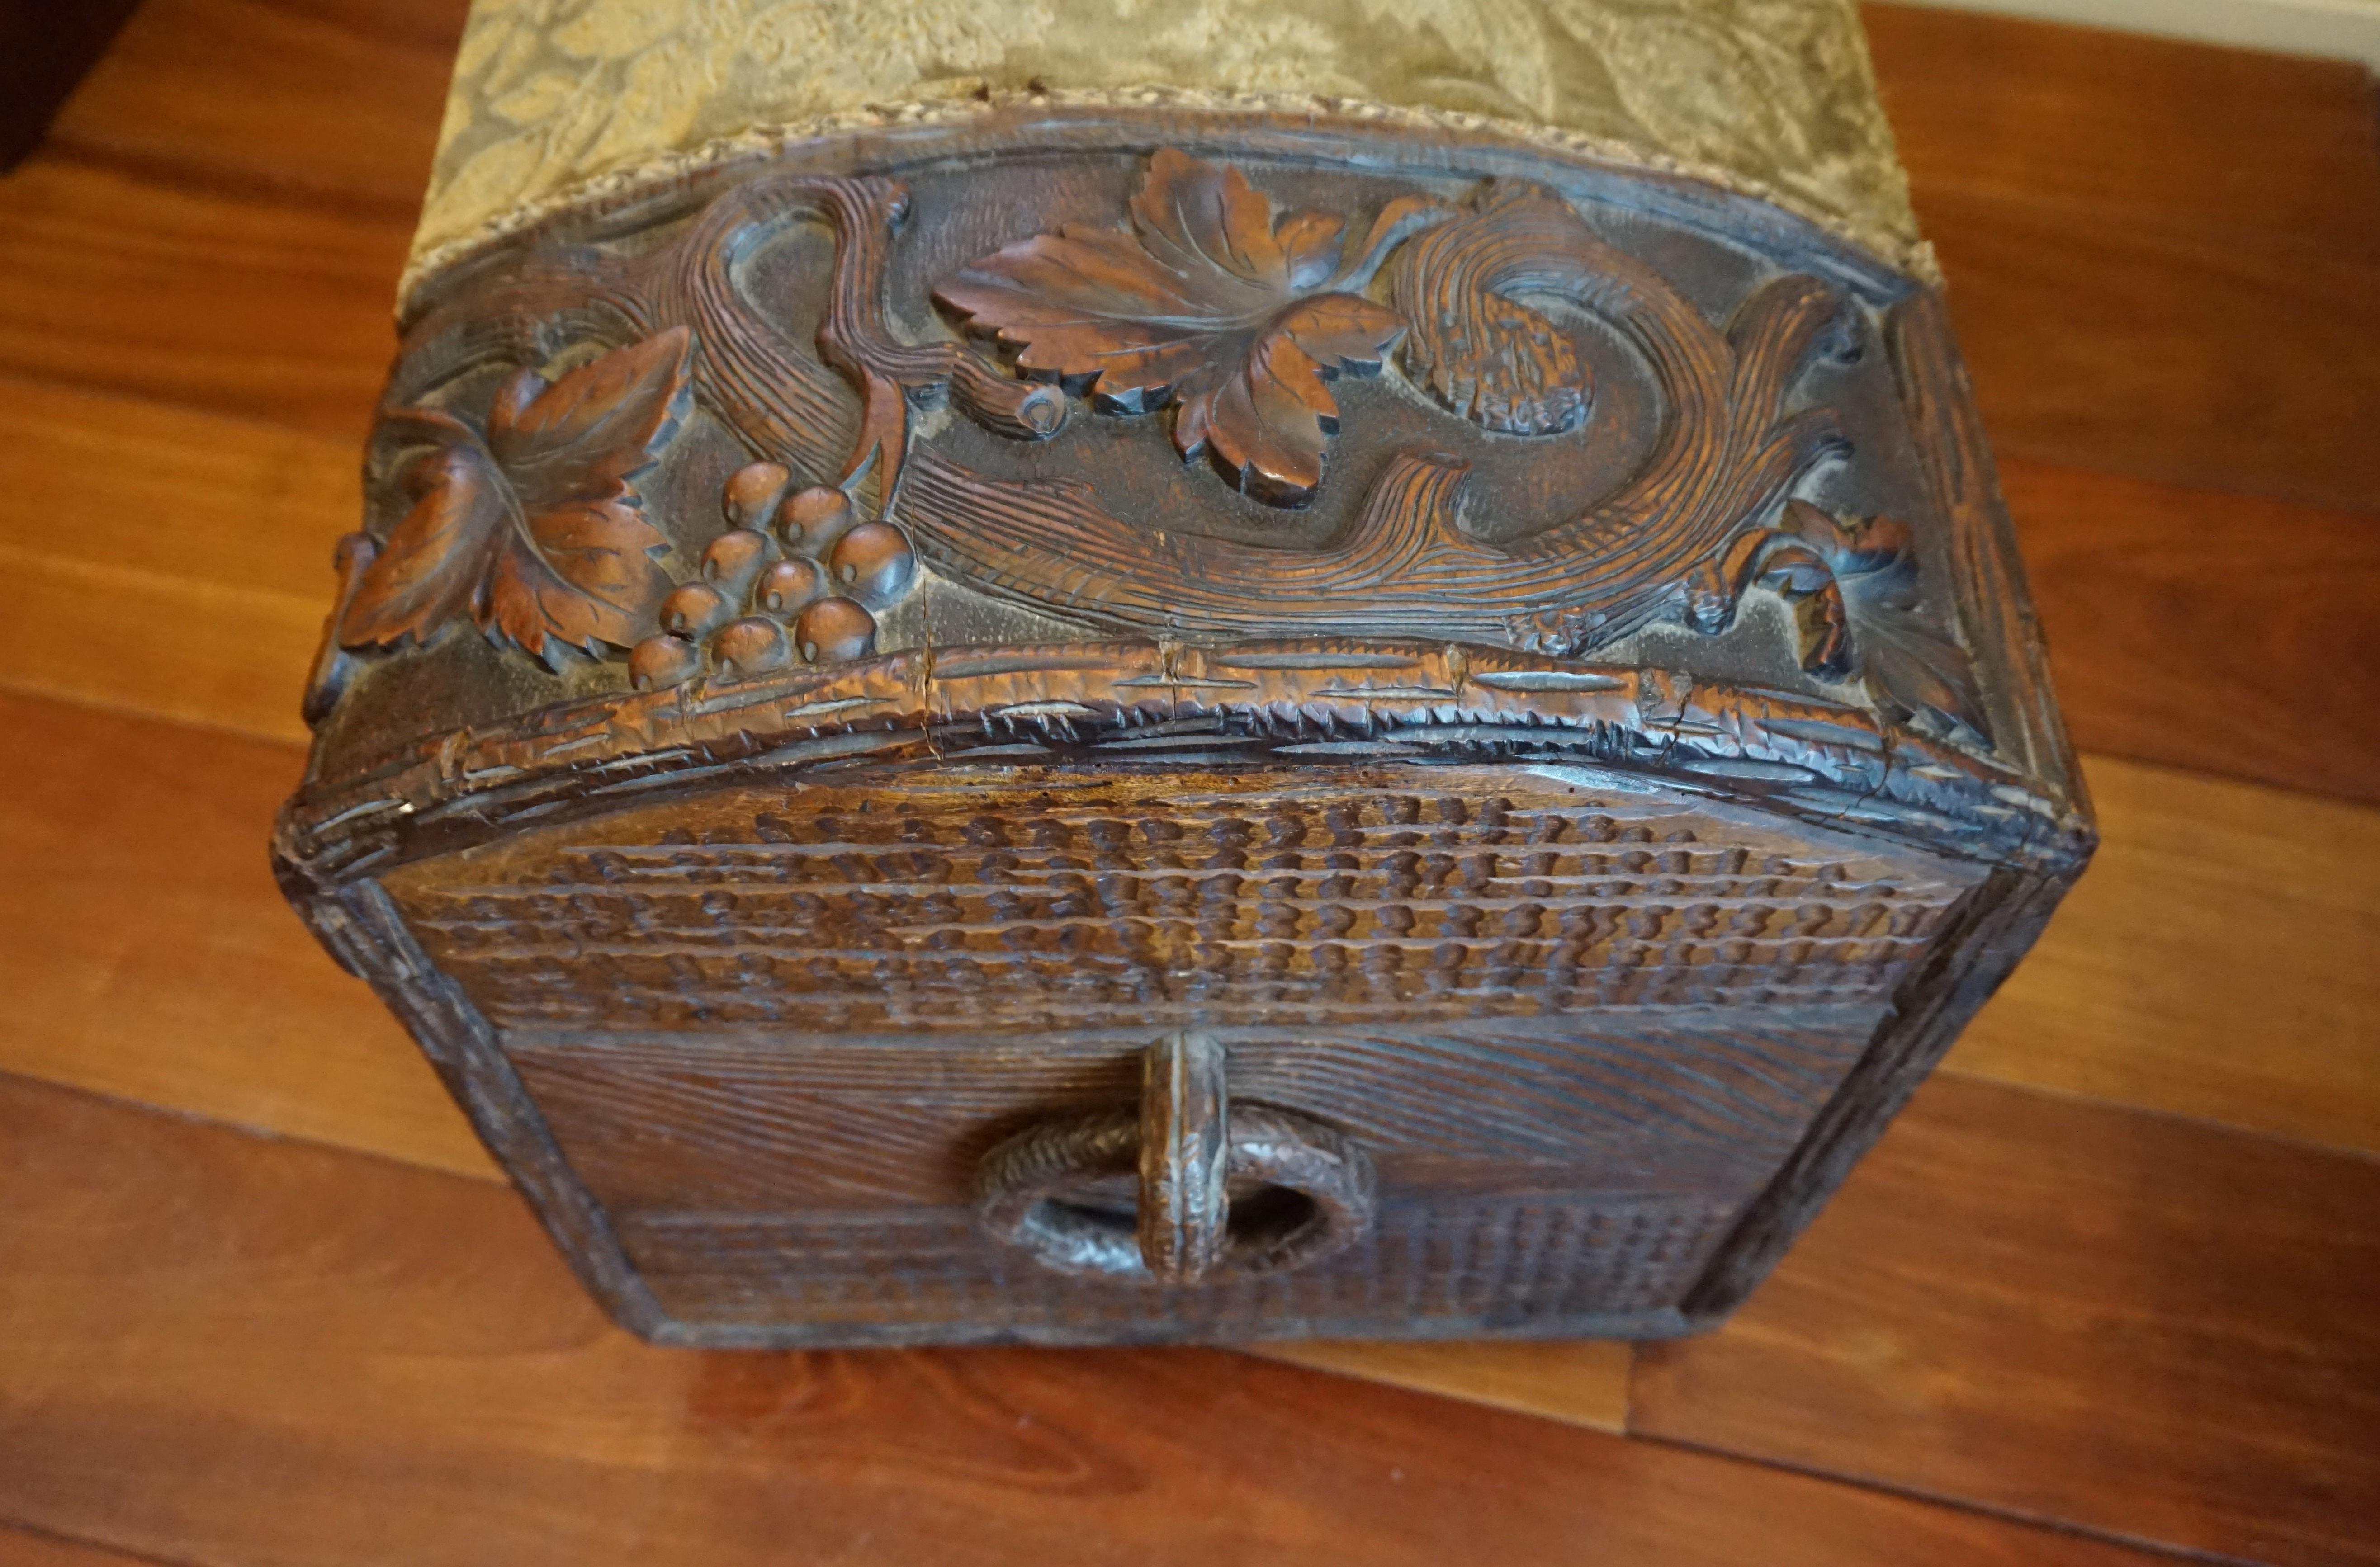 antique chest trunk